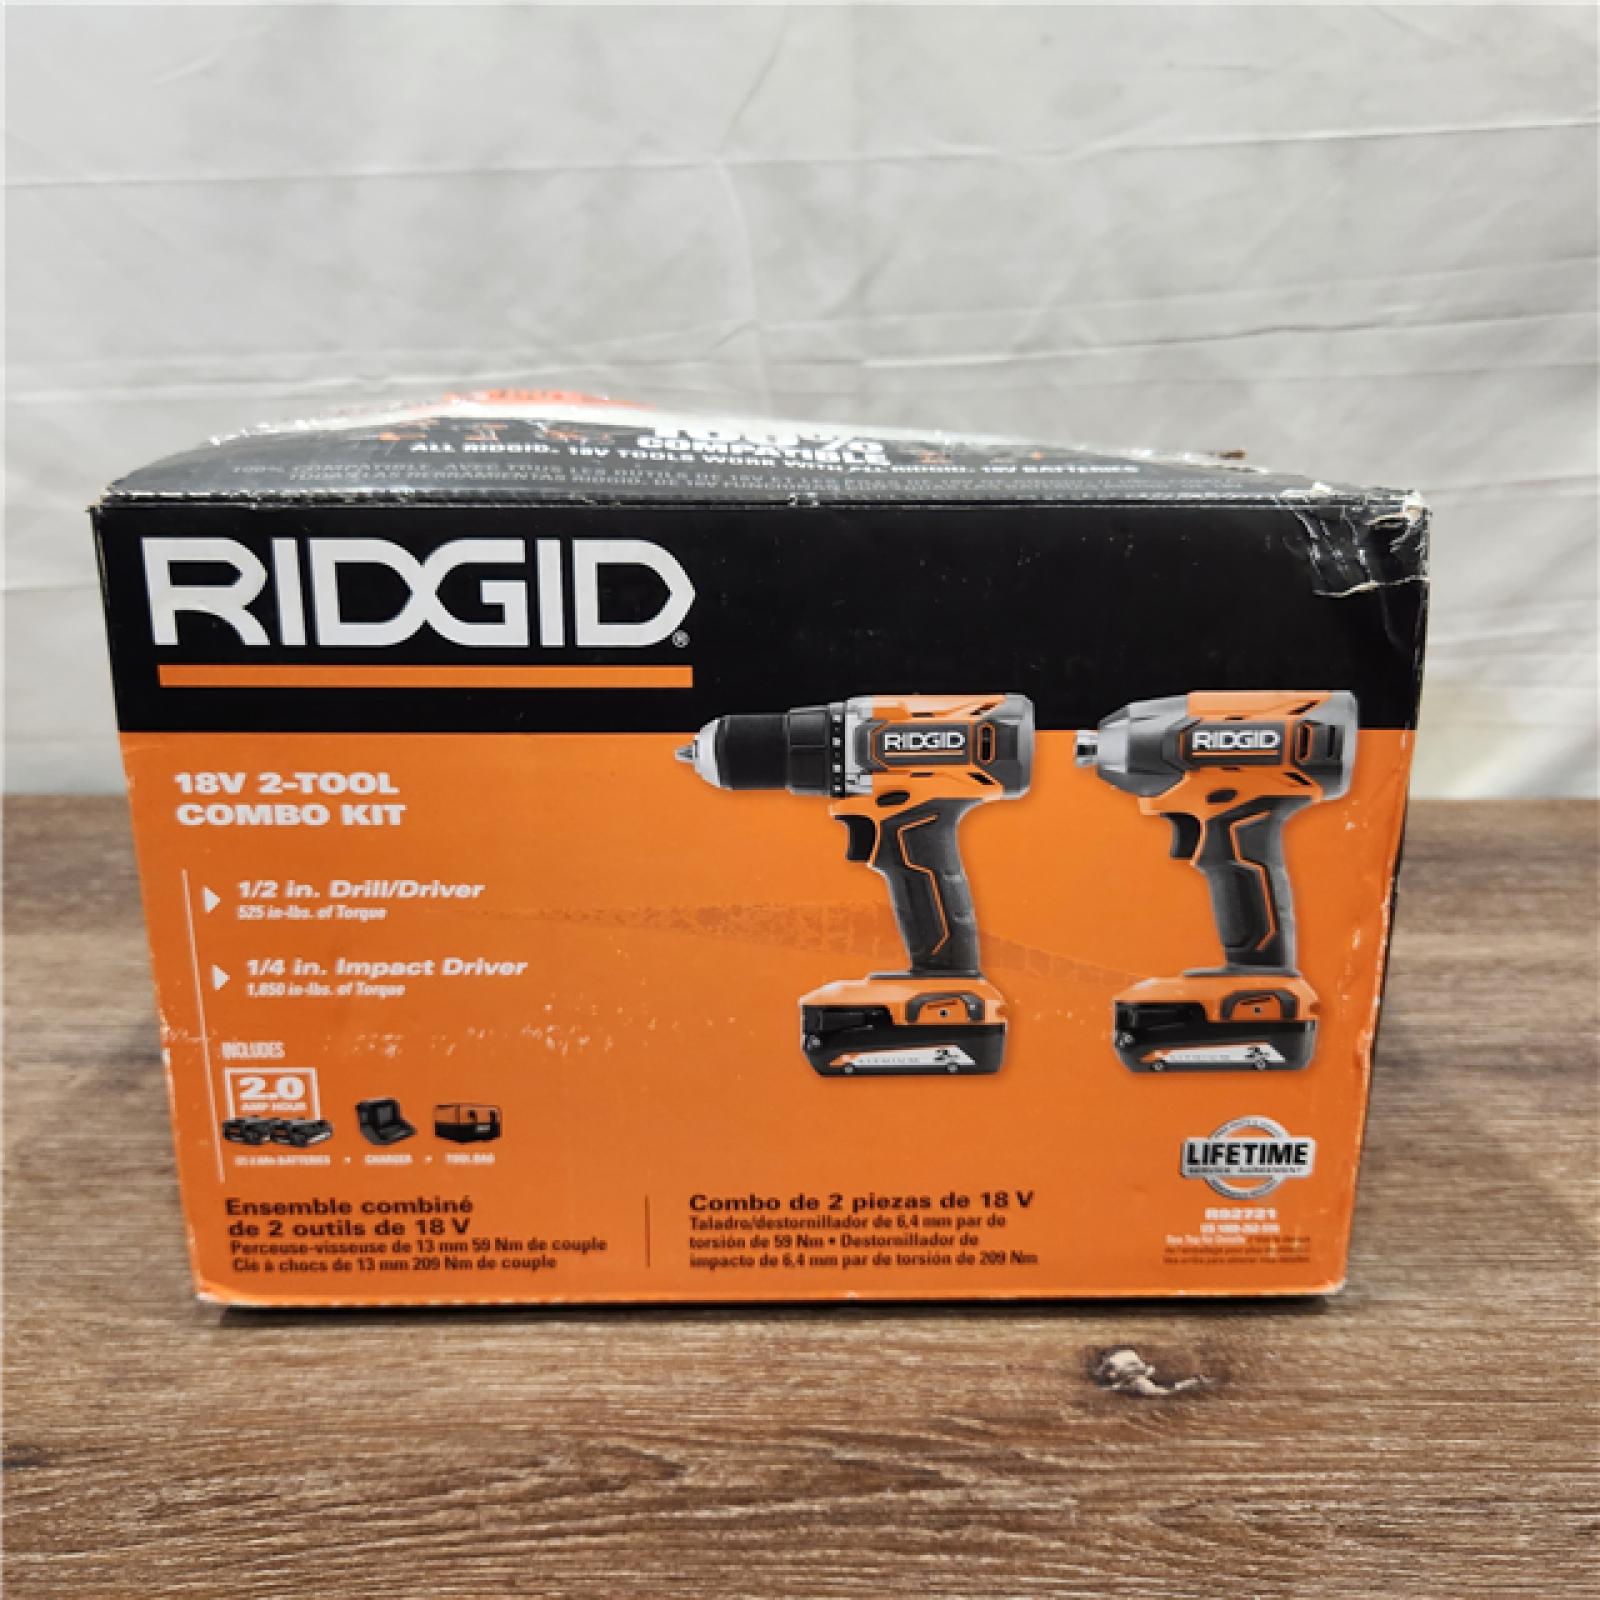 AS-IS RIDGID 18v 2 Tool Combo Kit 1/2 Drill/Driver 1/4 Impact Driver